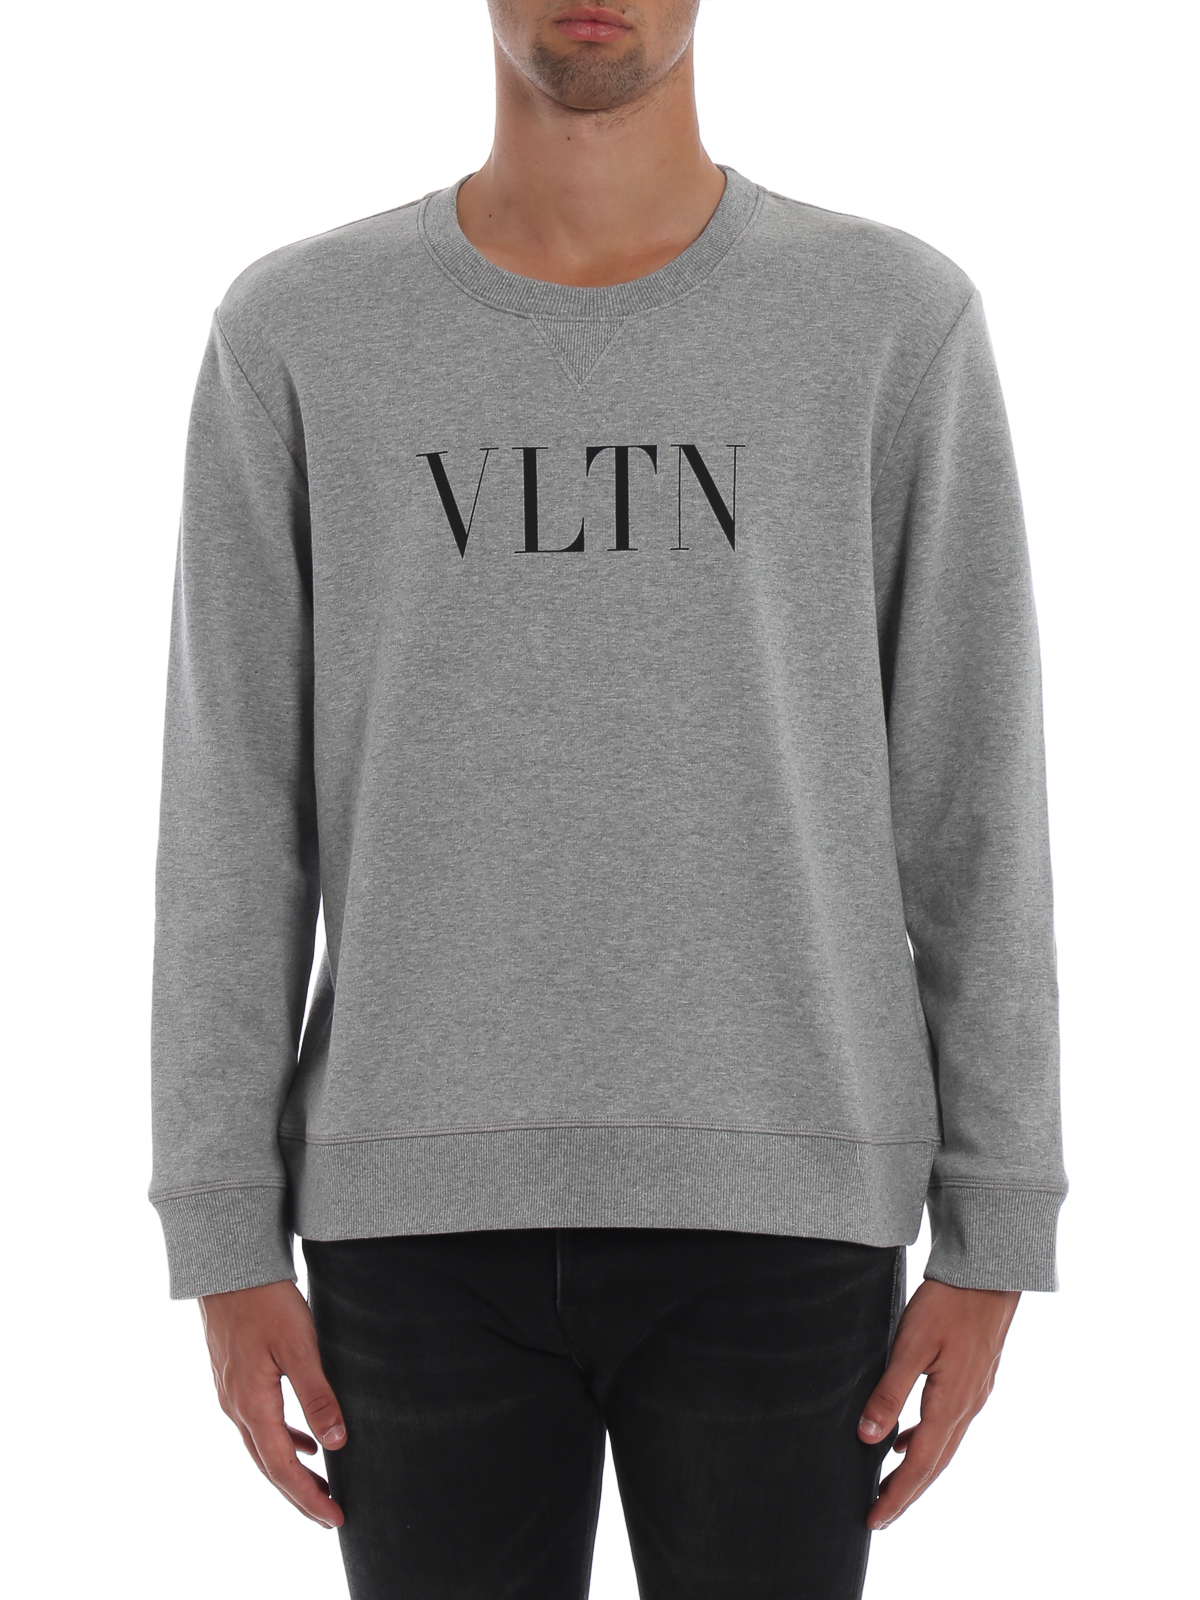 & Sweaters Valentino - VLTN melange jersey - QV3MF10G3TV080